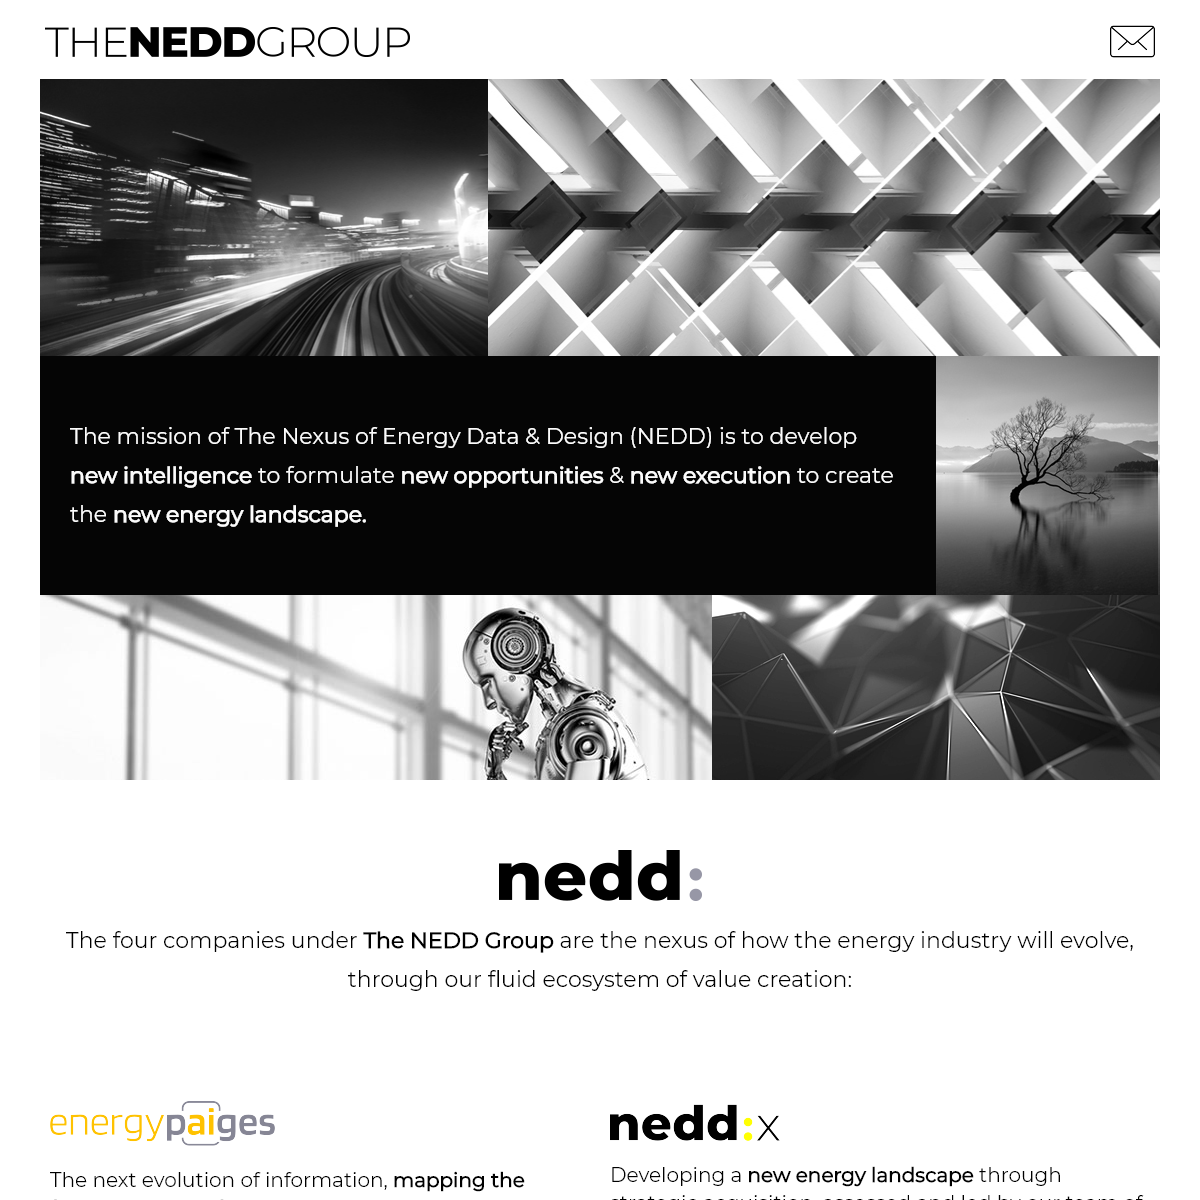 A complete backup of neddgroup.com